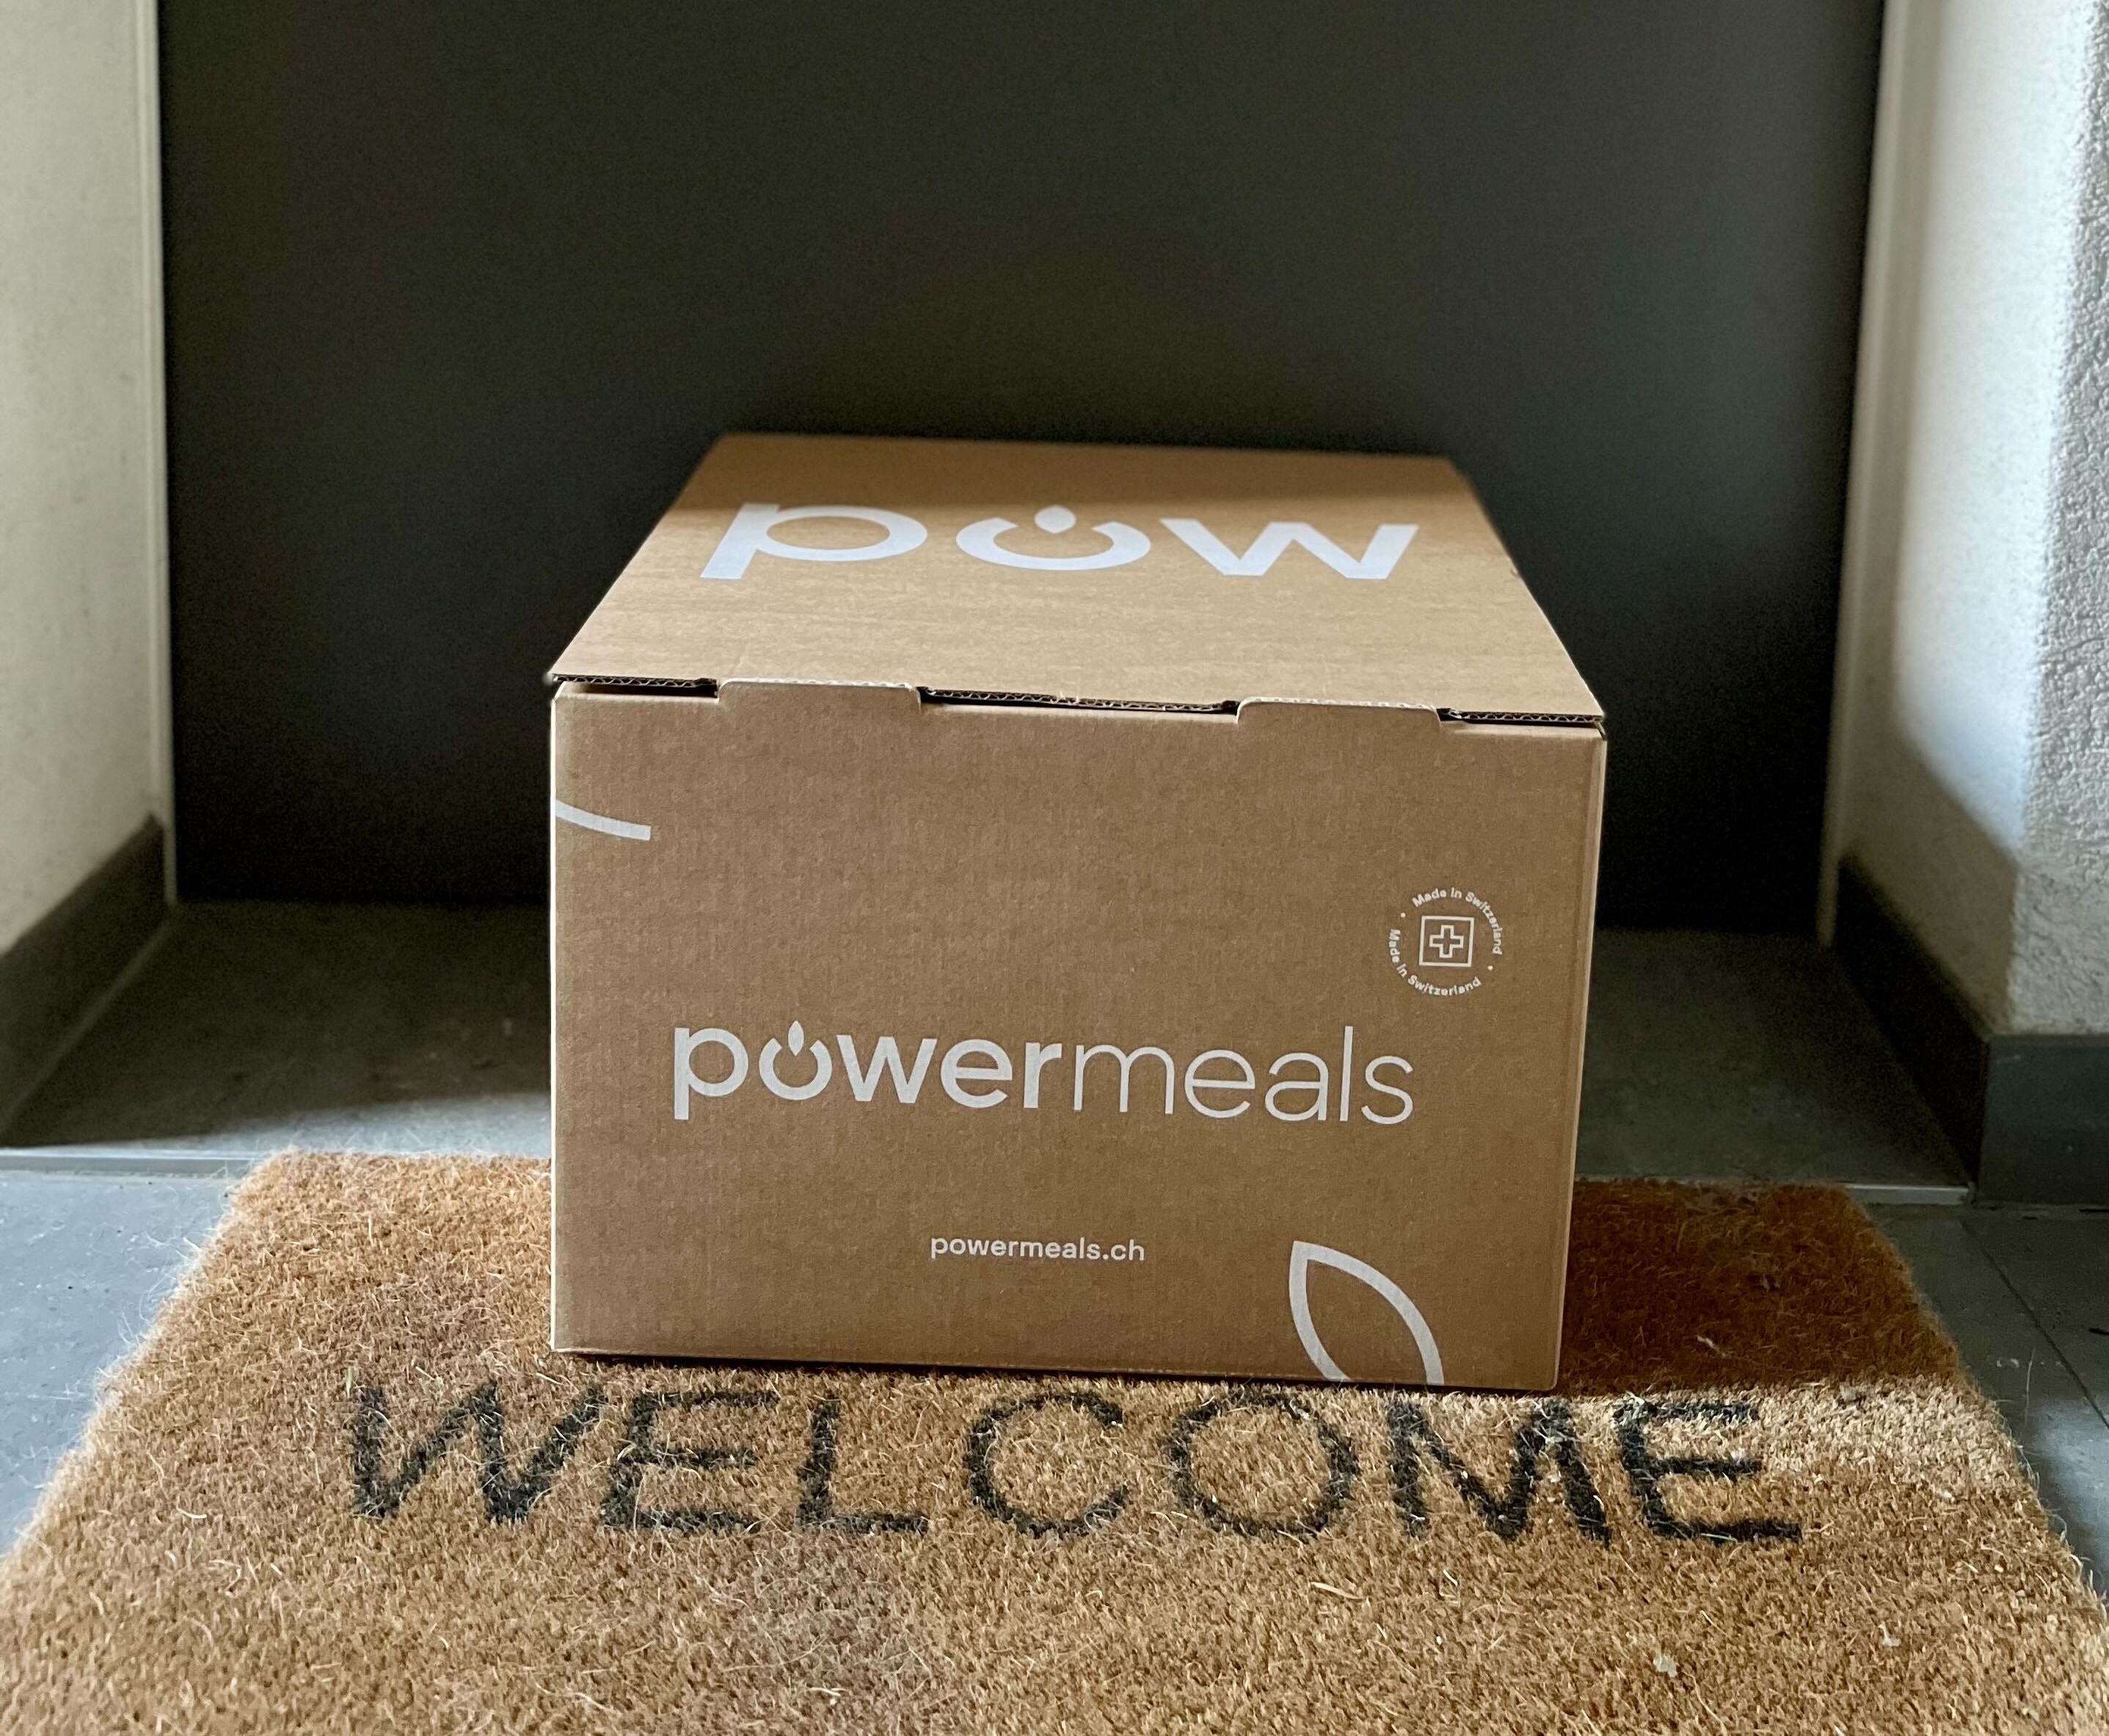 A Powermeals box on a welcome mat